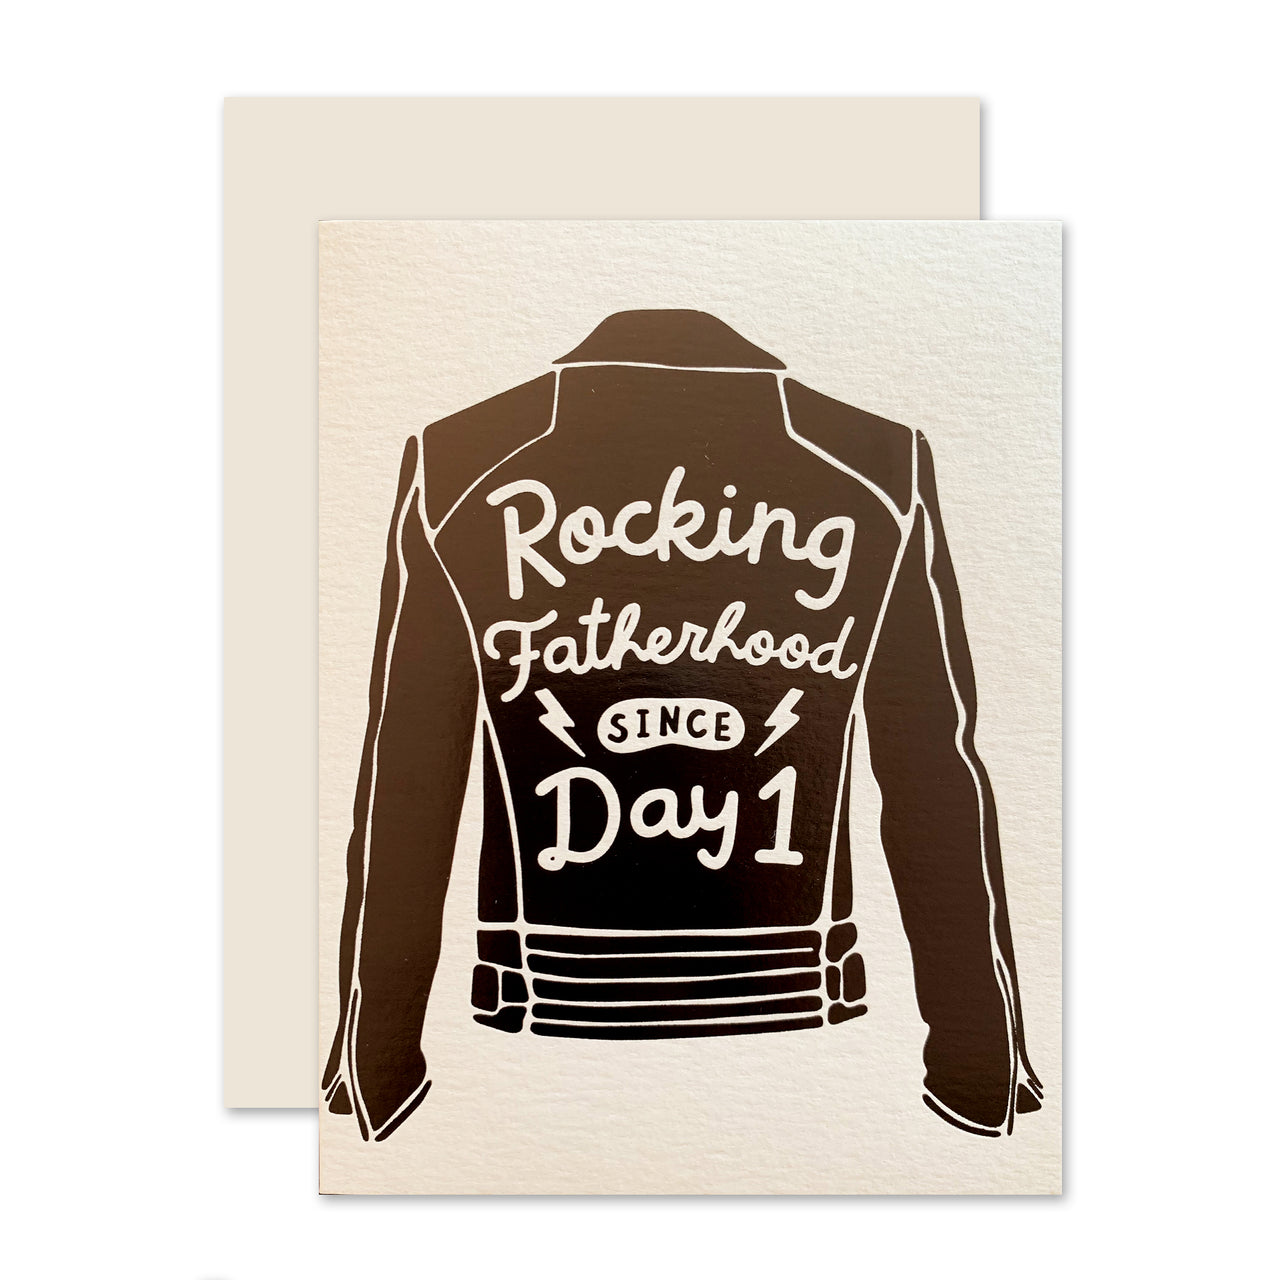 "Rocking Fatherhood Since Day 1"  Note Card